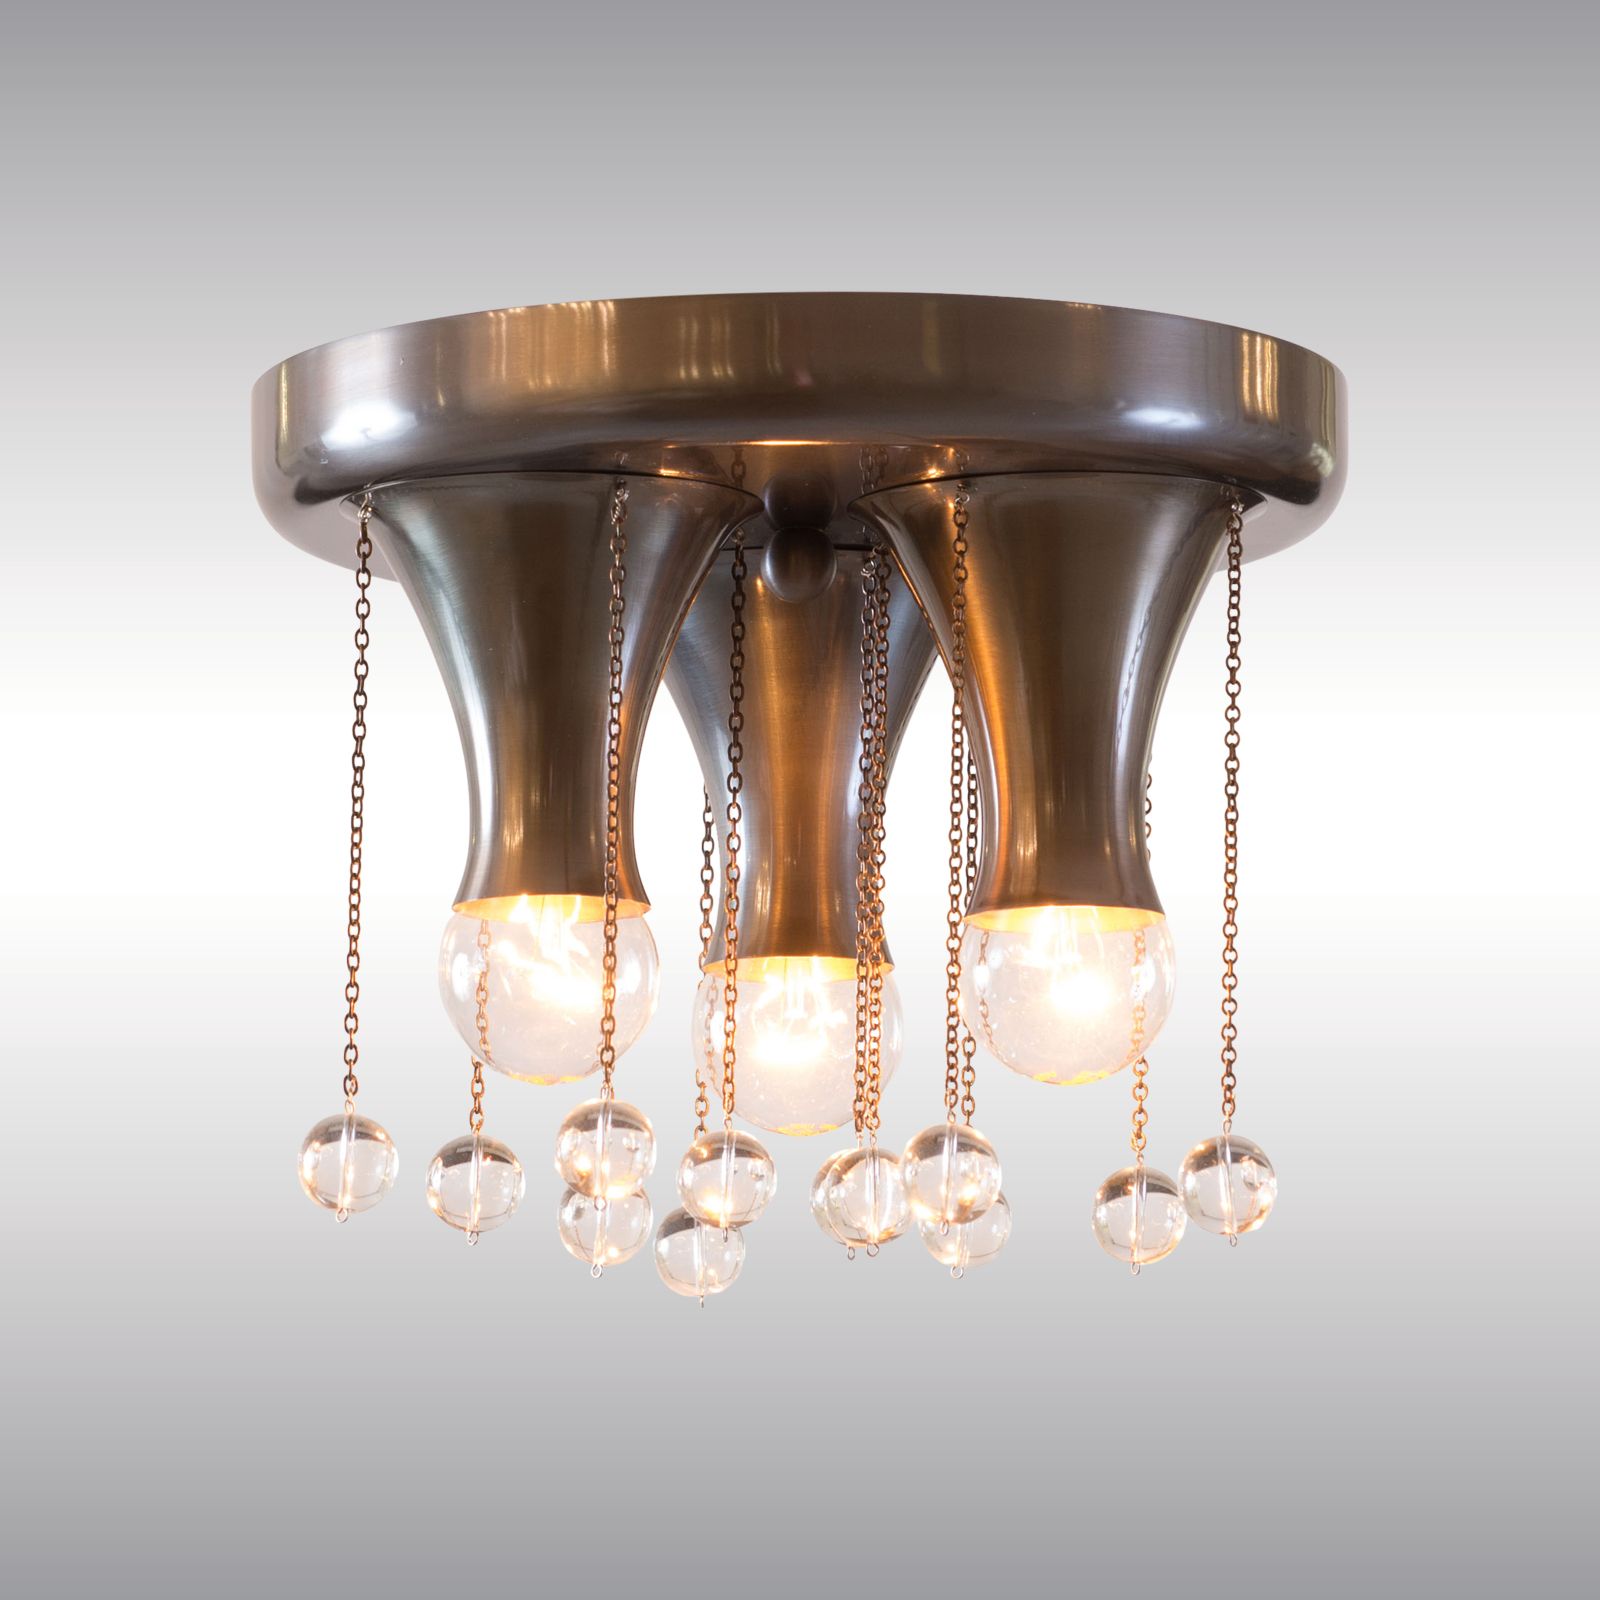 WOKA LAMPS VIENNA - OrderNr.: 22124|WW-Flush-Triple - Design: Josef Hoffmann